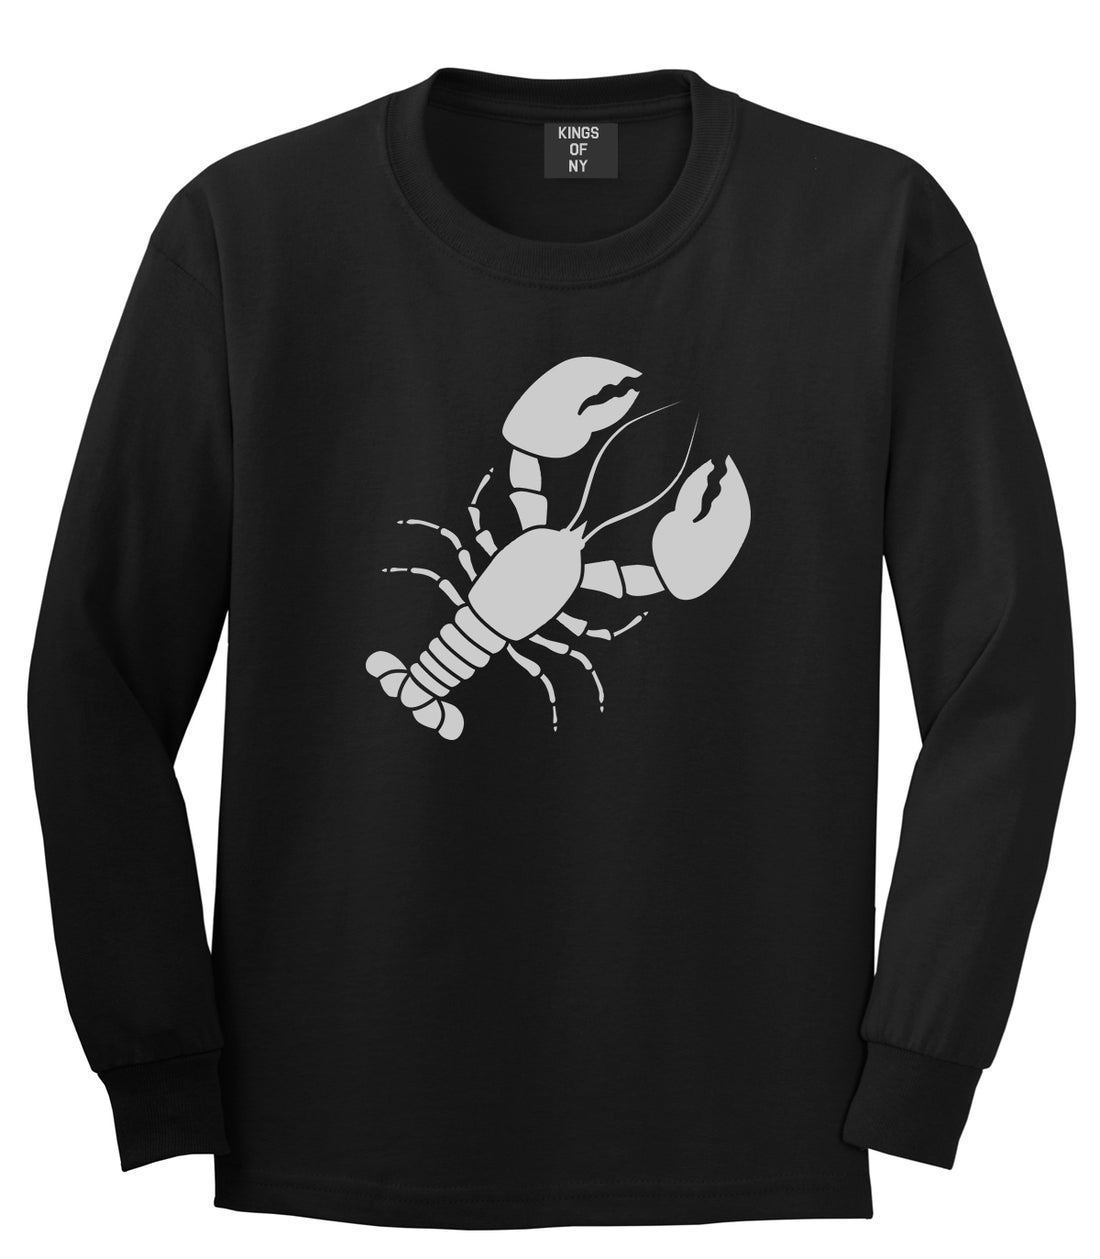 Lobster Mens Long Sleeve T-Shirt Black by Kings Of NY